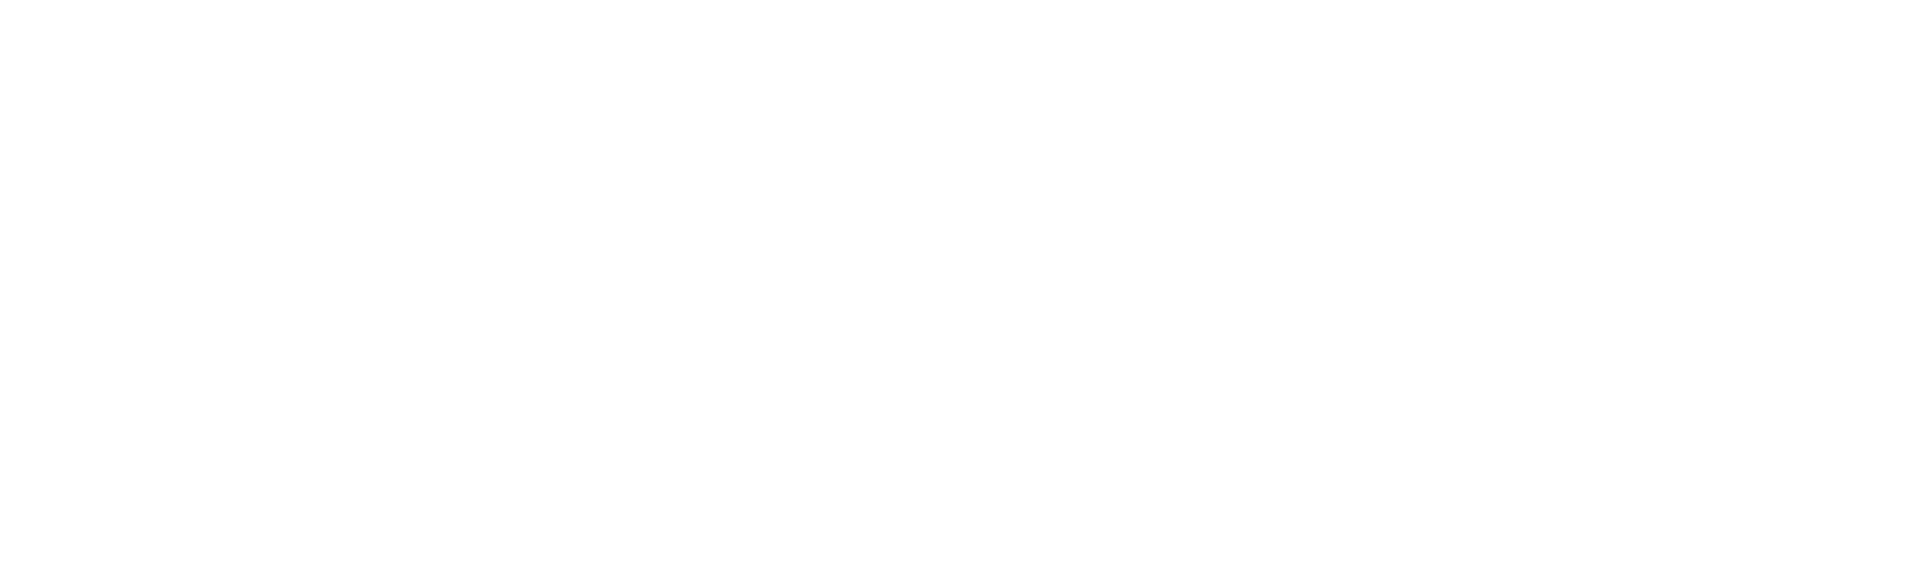 emerson ecologics logo